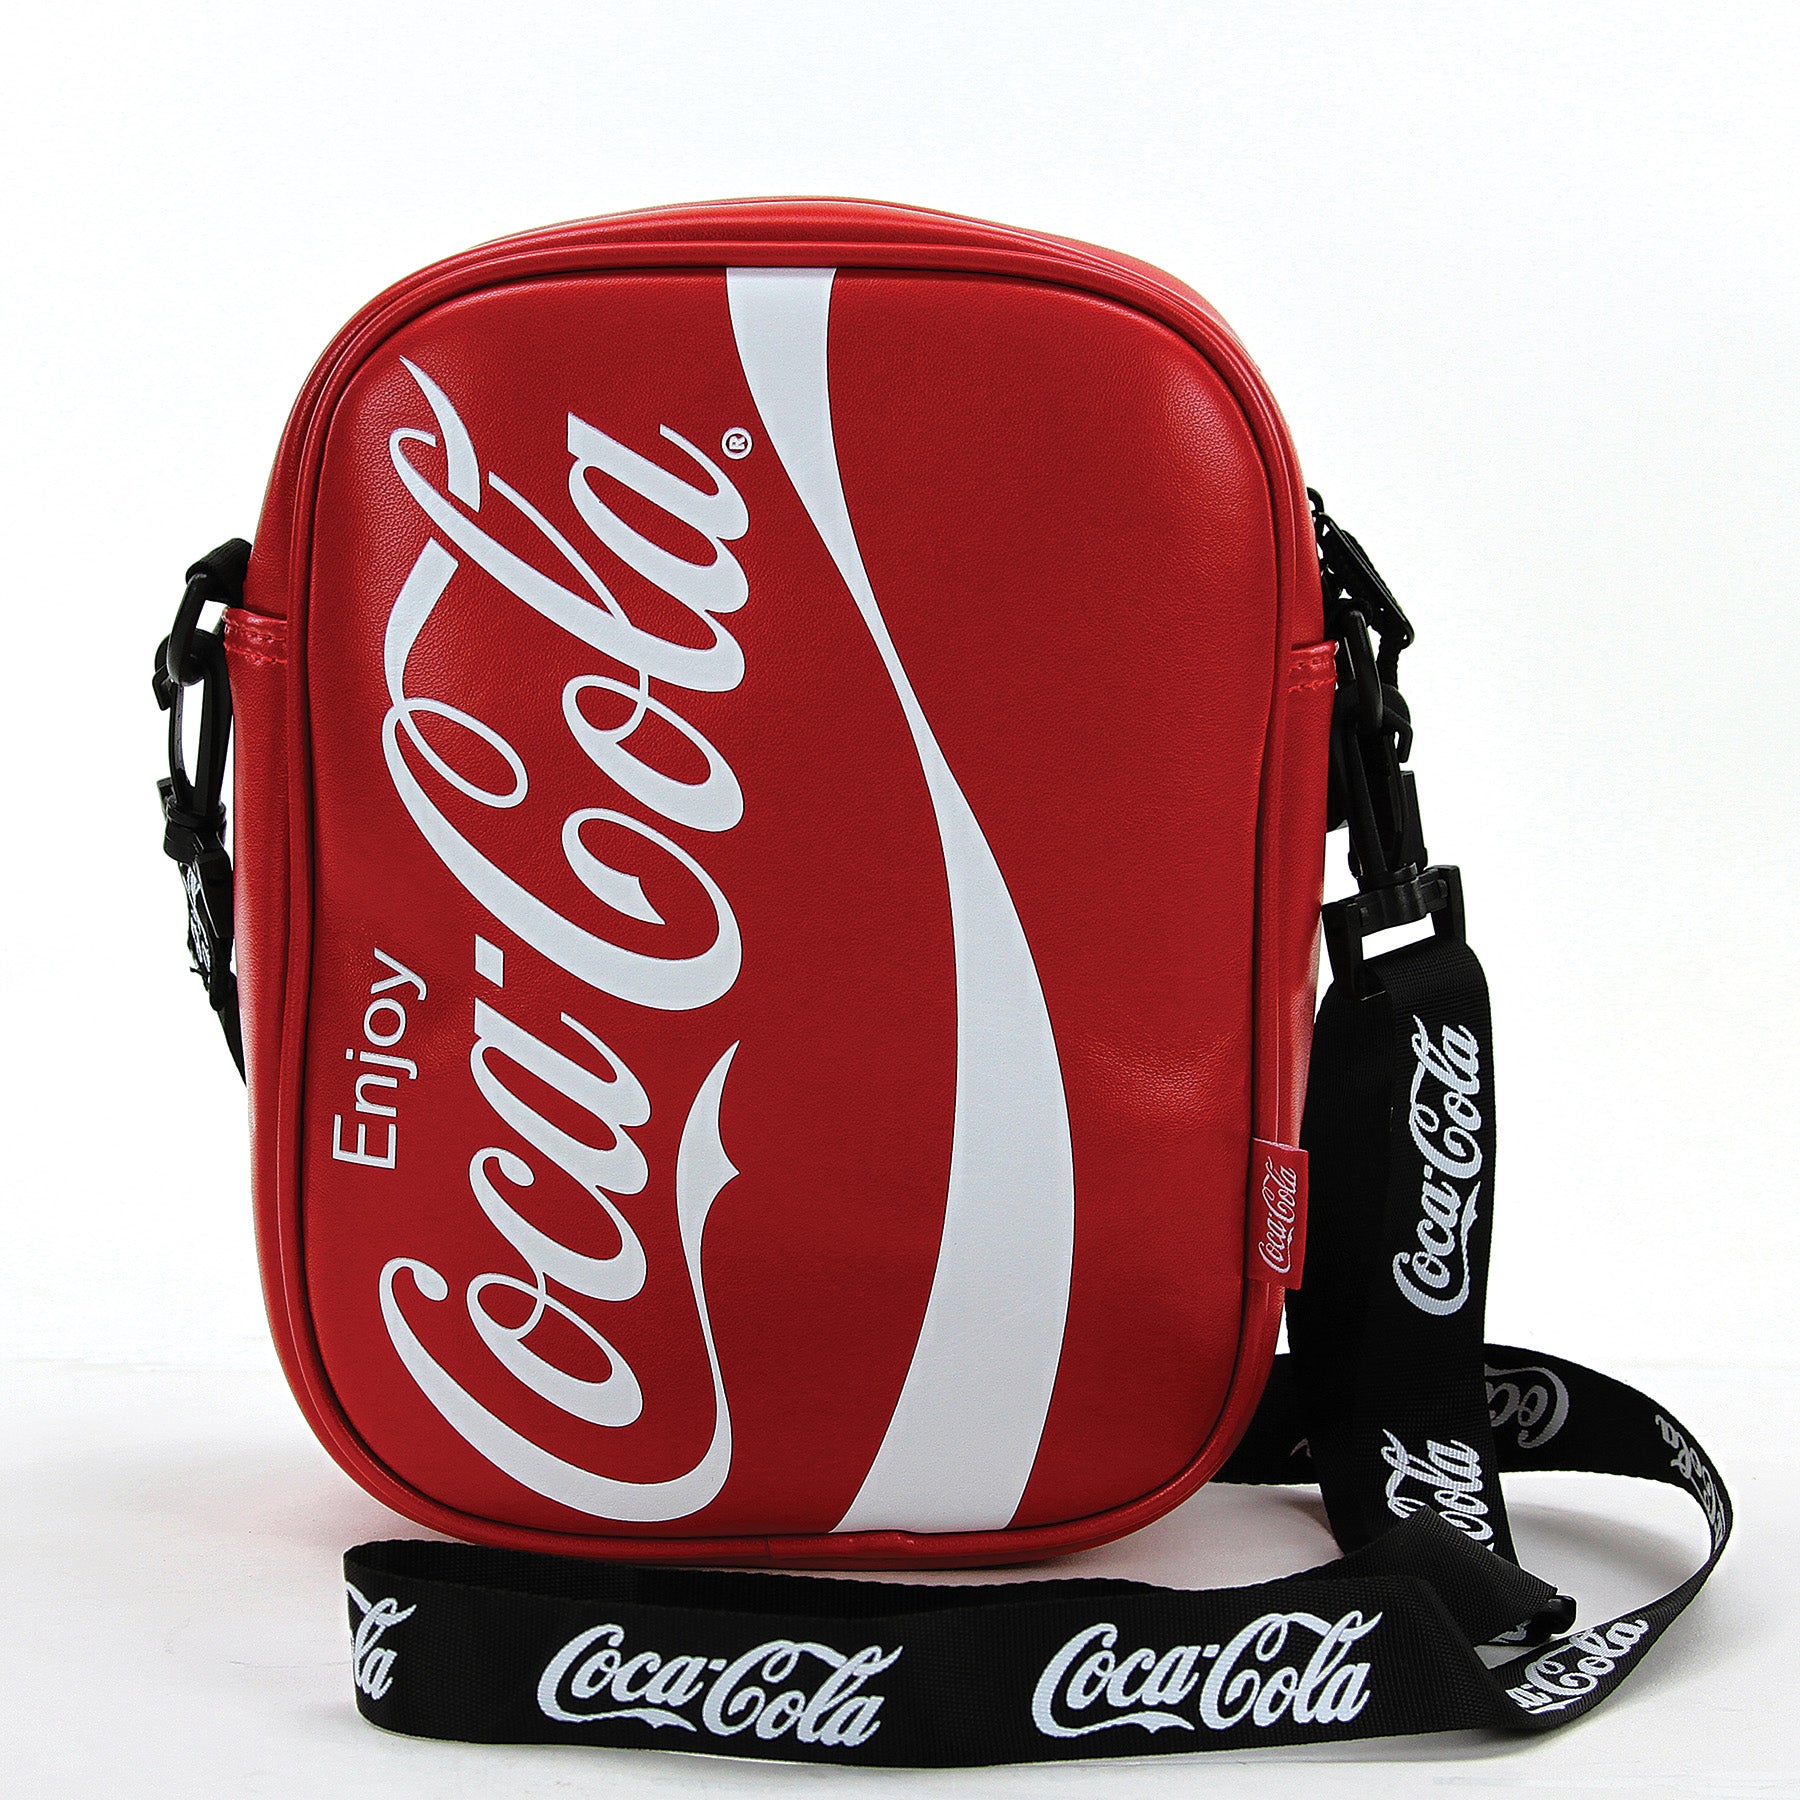 Coca-Cola Vertical Shape Rectangle Shoulder Bag, red color, front view